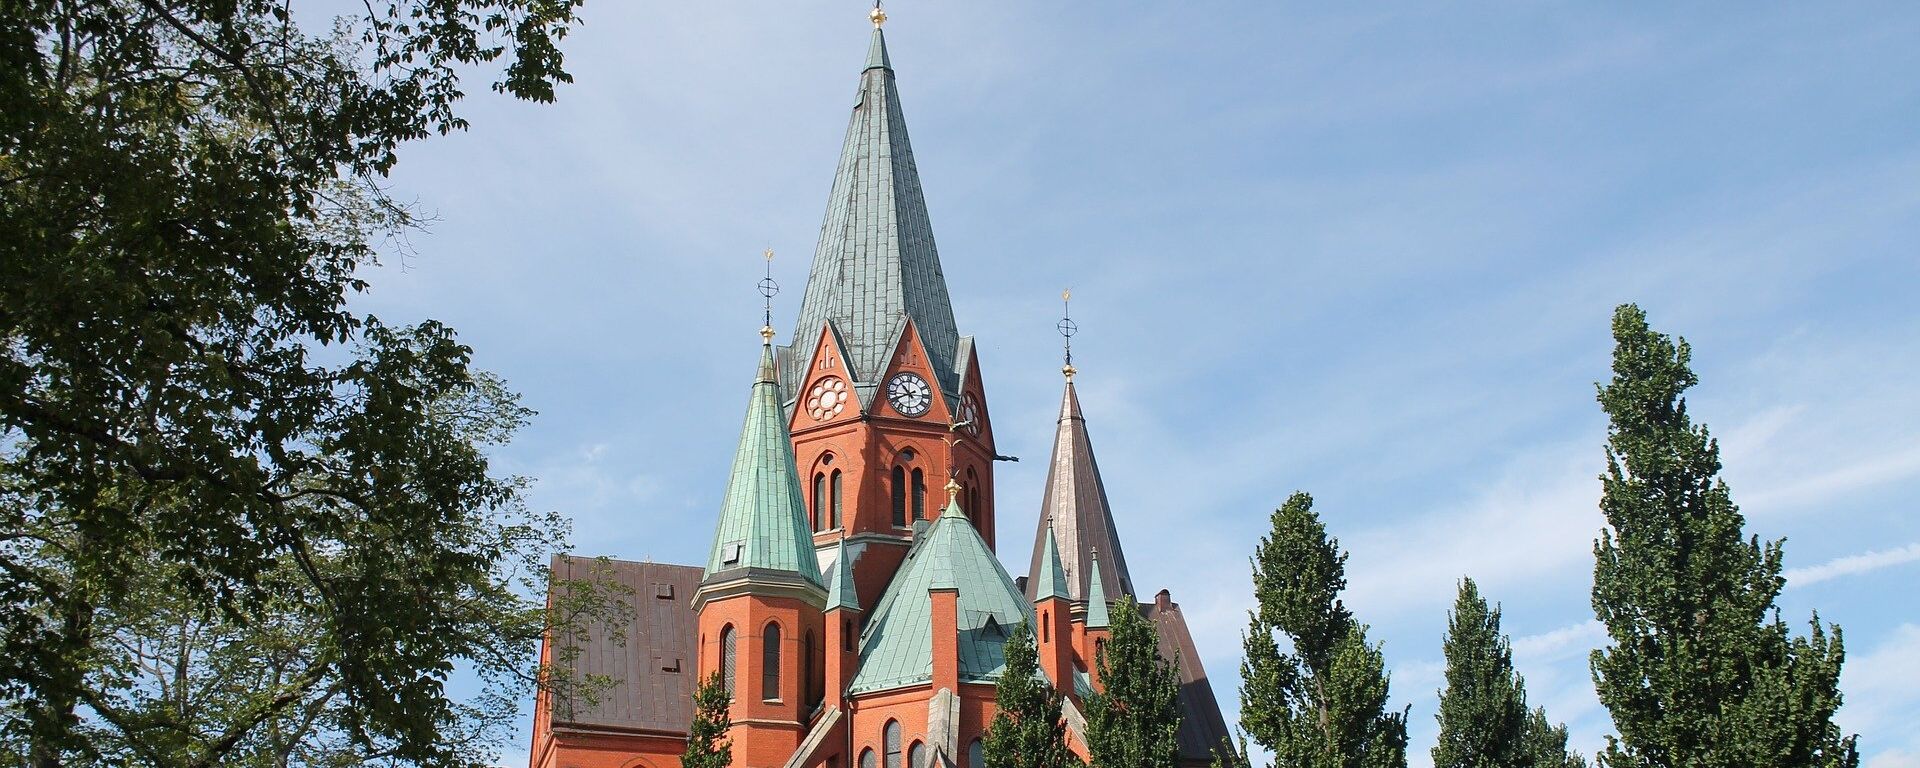 Church in Sweden - Sputnik International, 1920, 18.05.2021